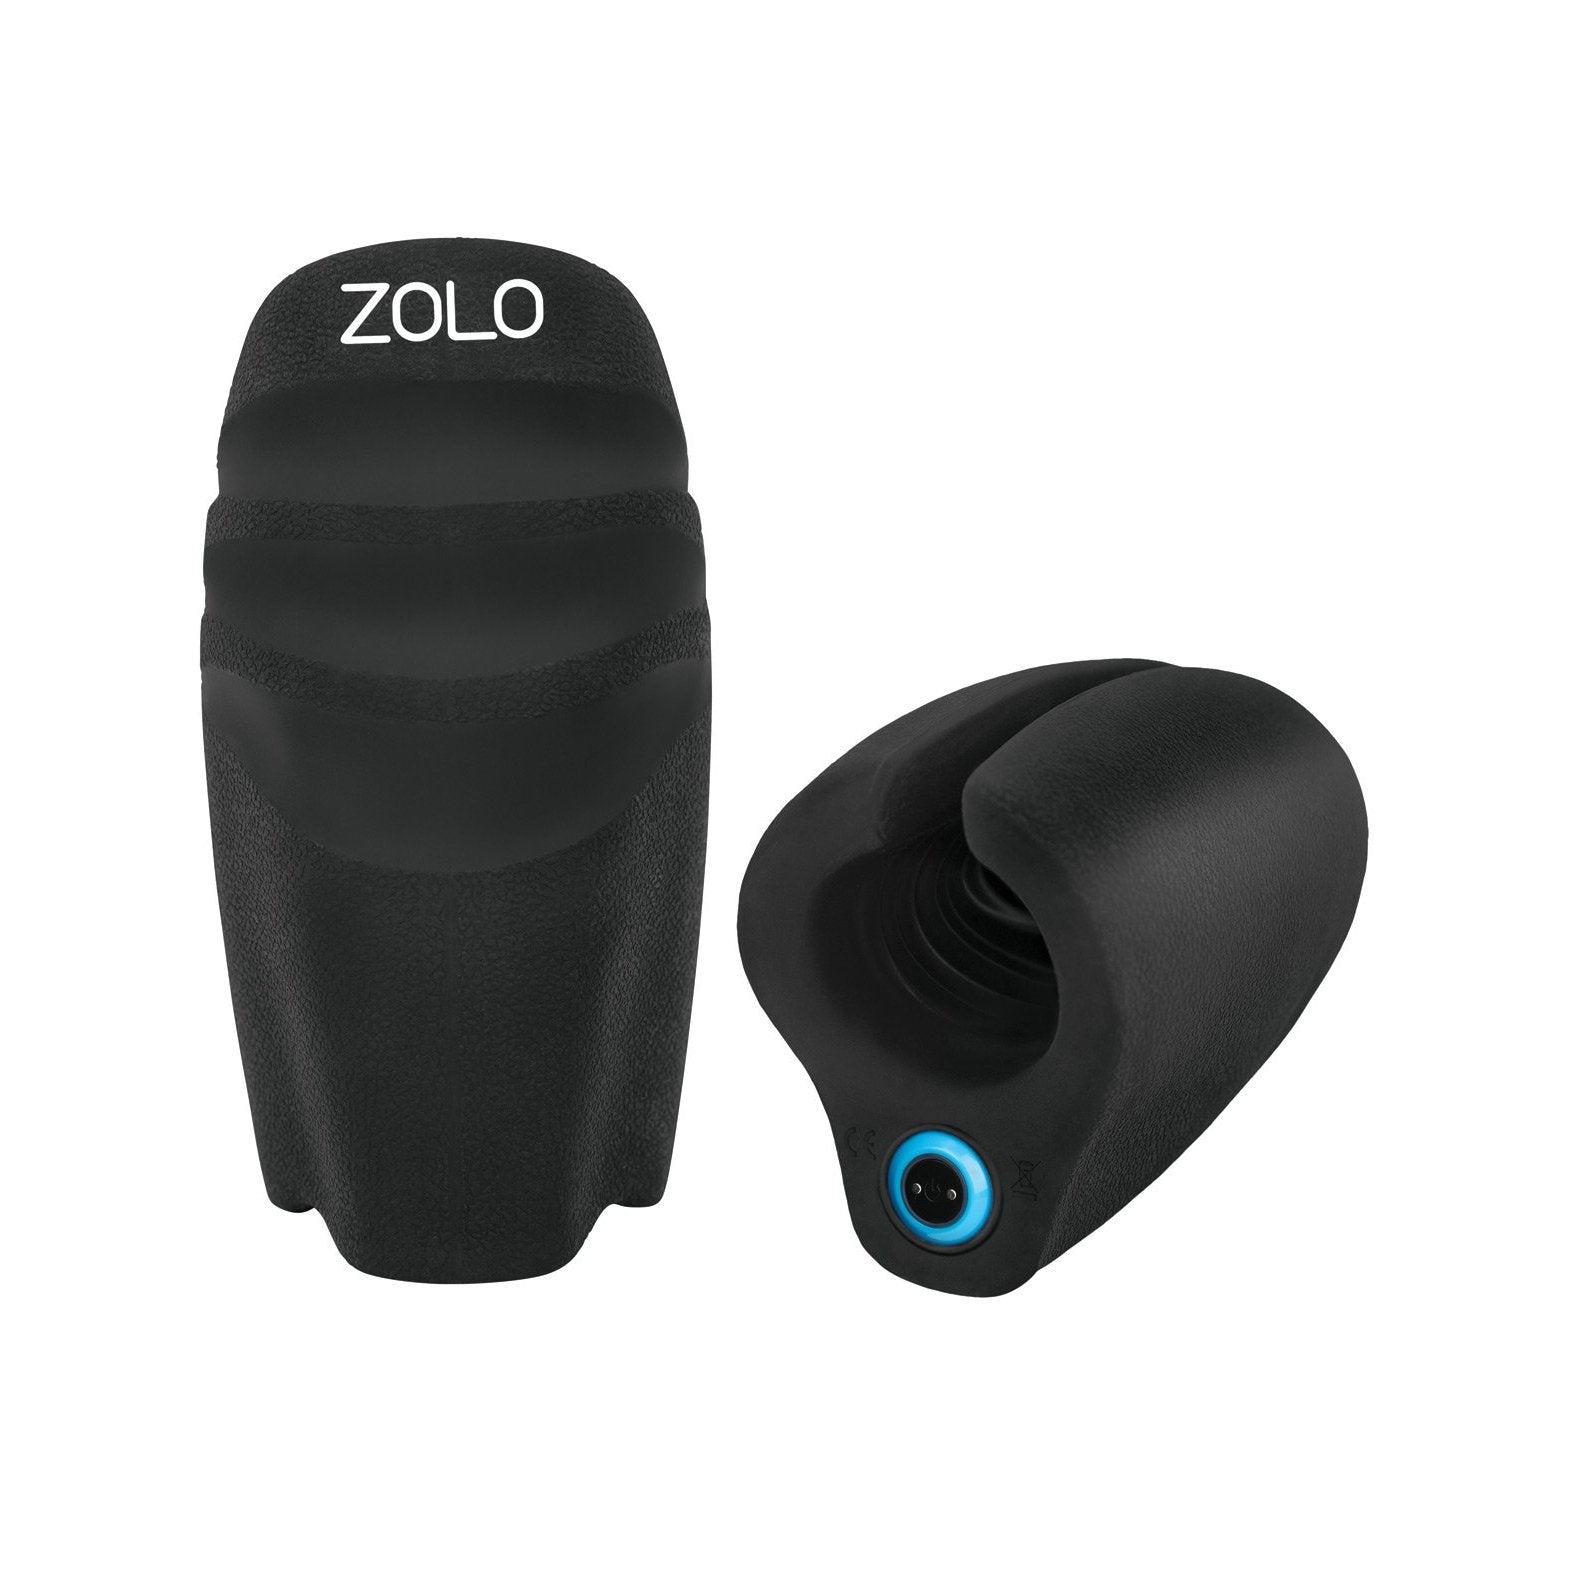 Zolo Cockpit Palm Sized Squeezable Vibrating Male Stimulator Stroker XL